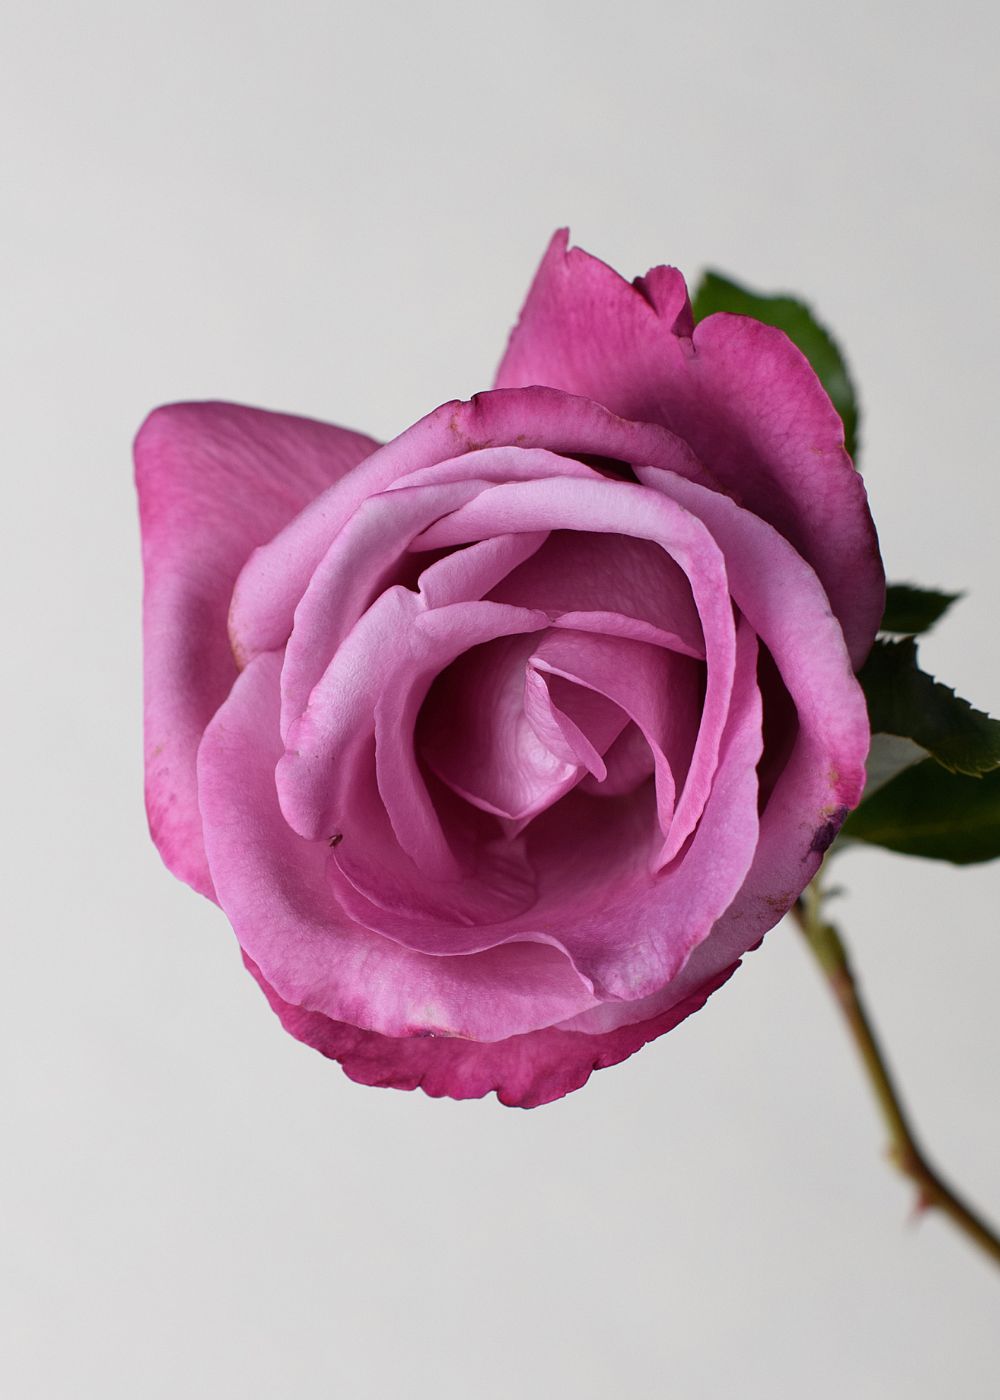 Fragrant Plum Rose Bare Root Grade 1.5 Bundle - Menagerie Farm & Flower